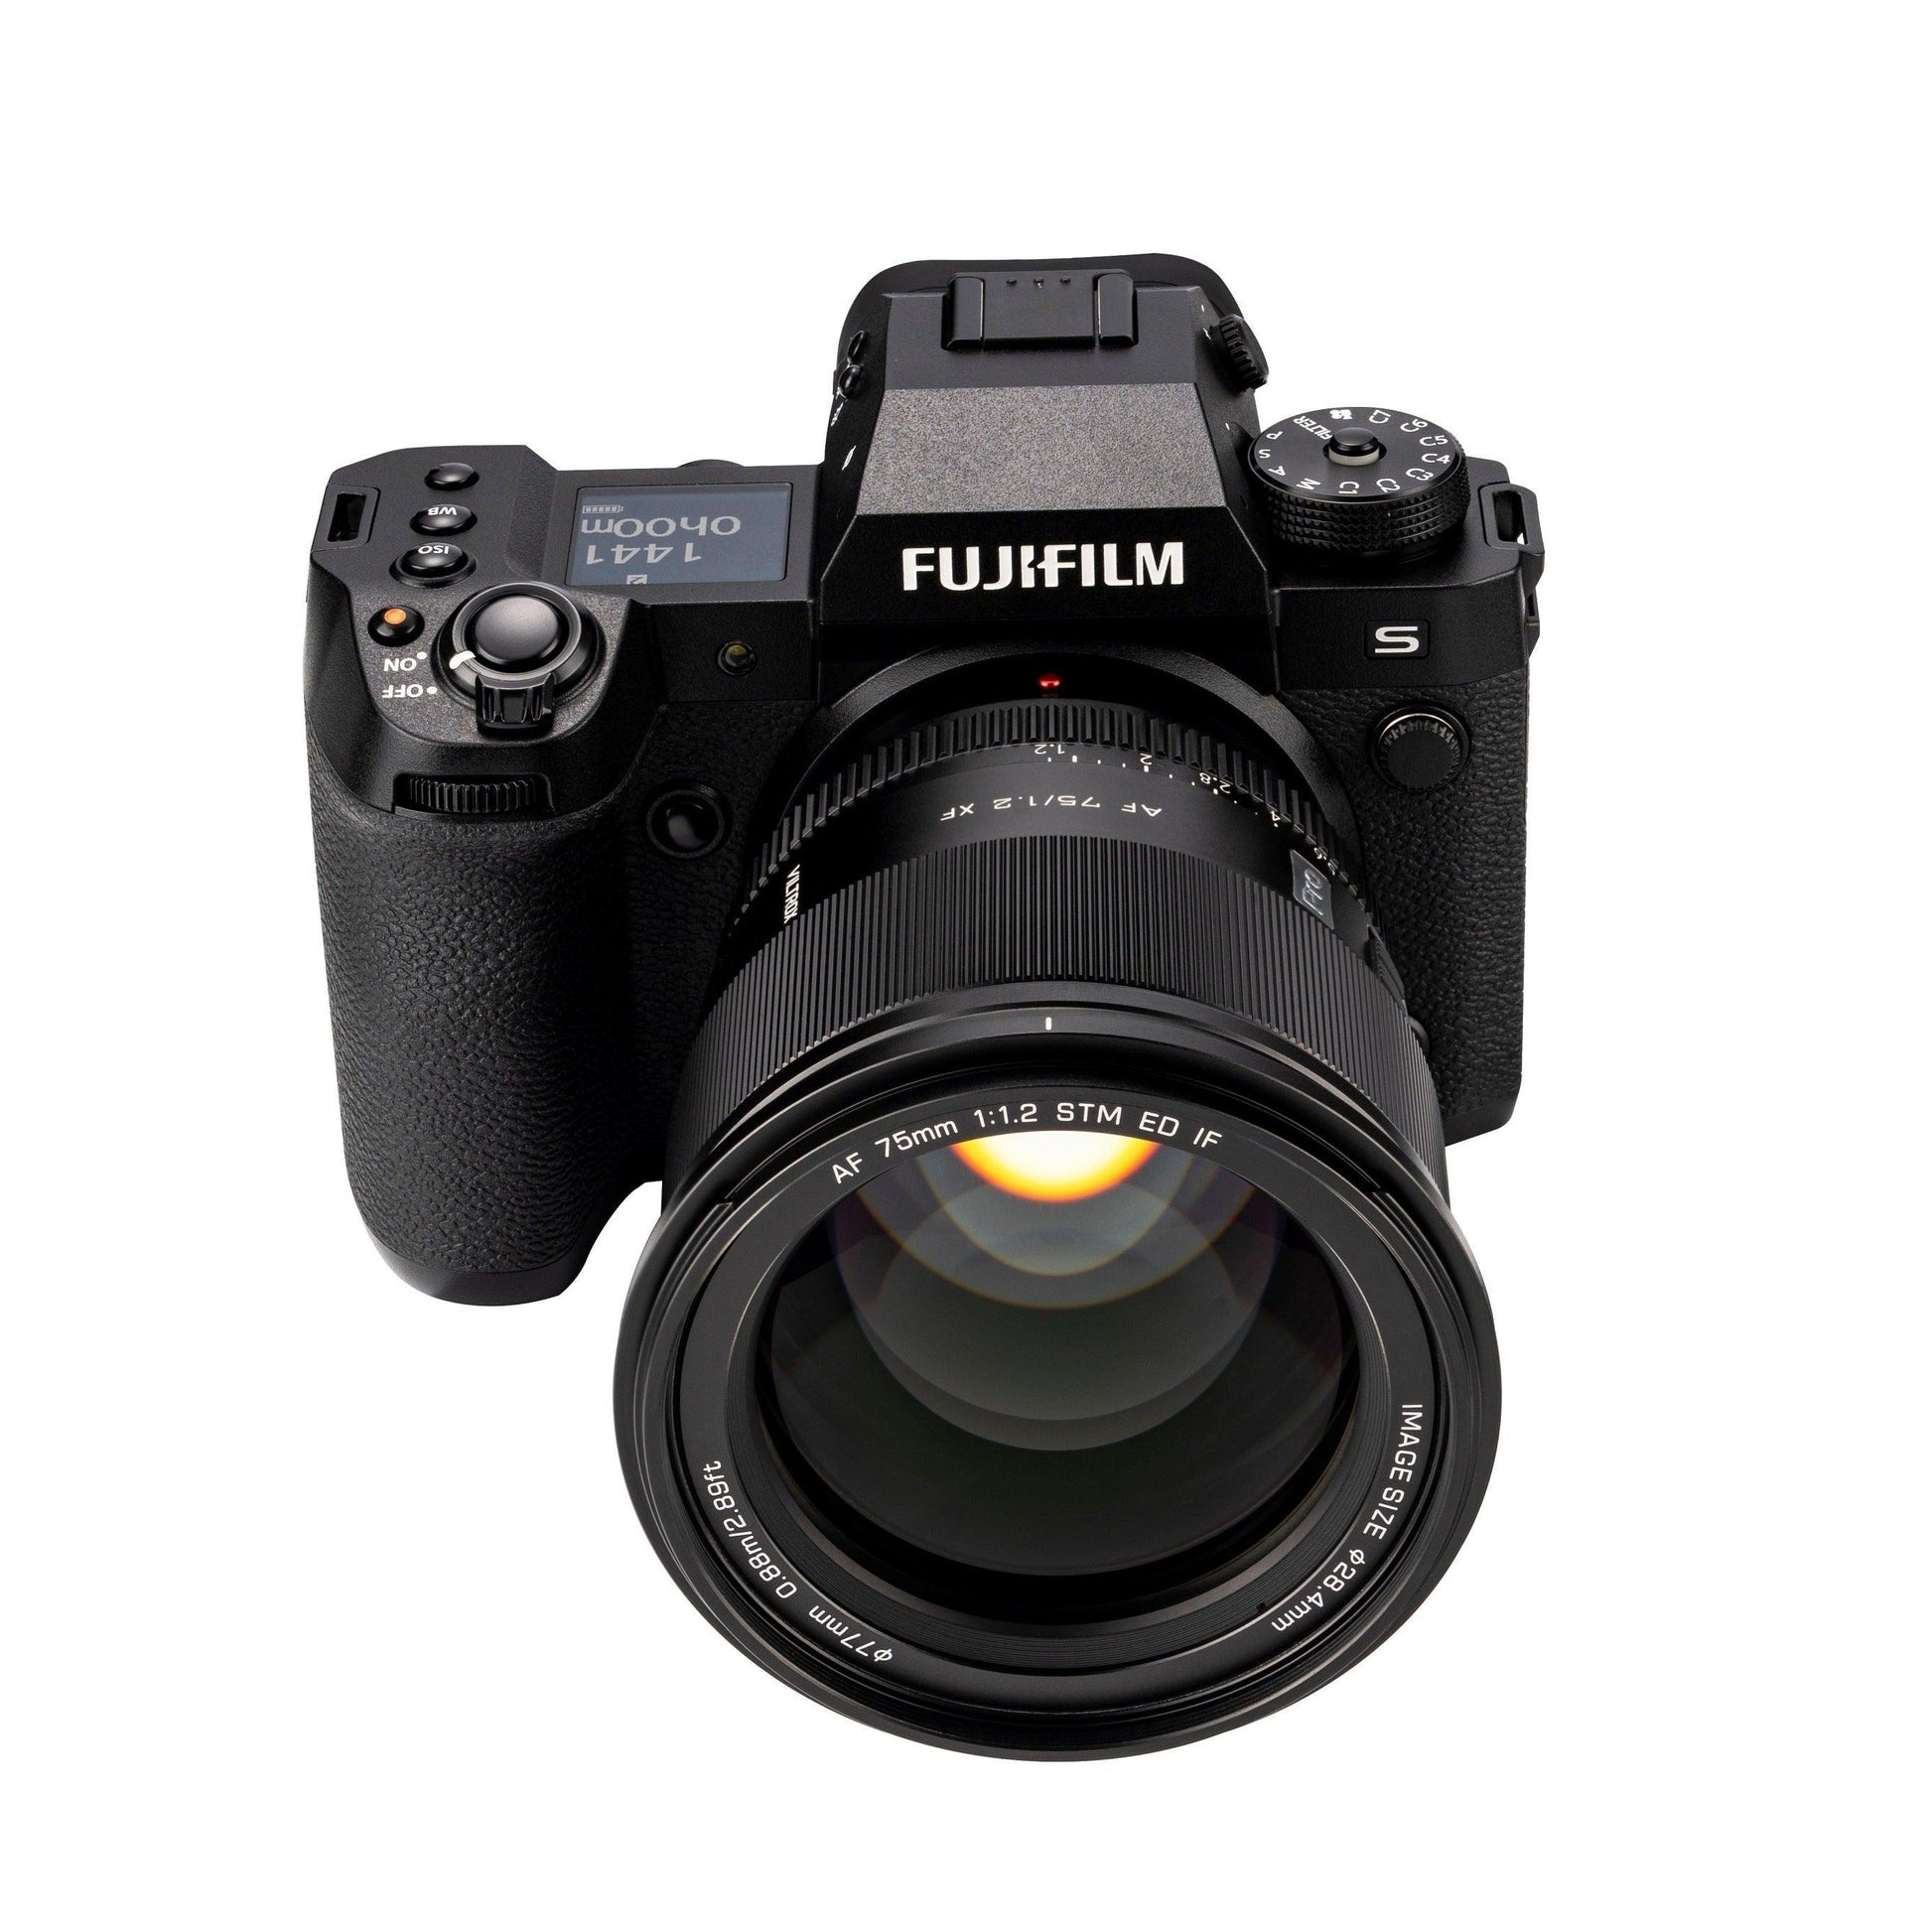 Viltrox 75mm F1.2 PRO XF Auto Focus Large Aperture Prime Lens for Fujifilm X - Vitopal